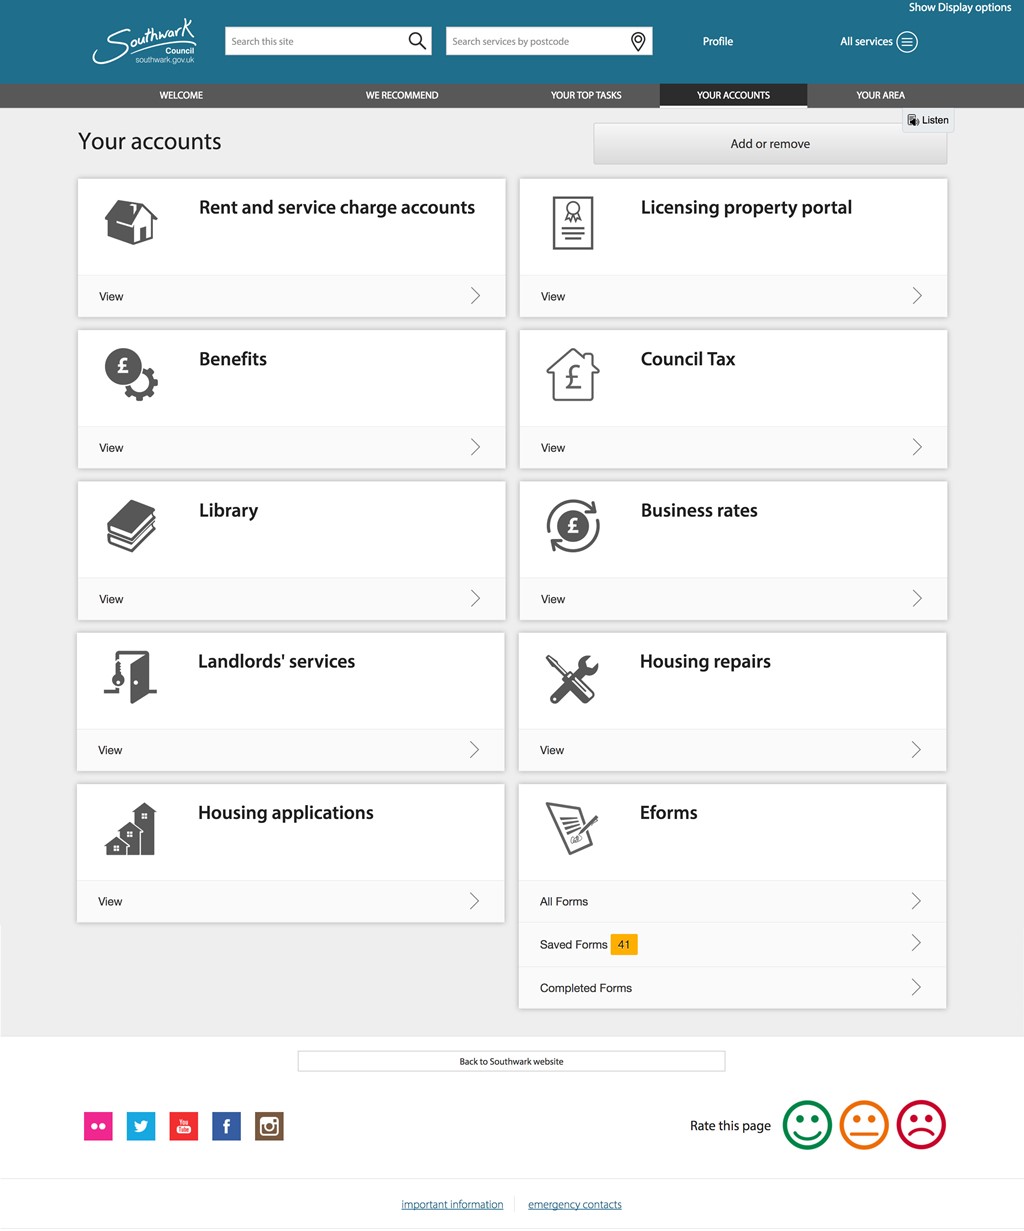 Southwark citizen portal dashboard - profile